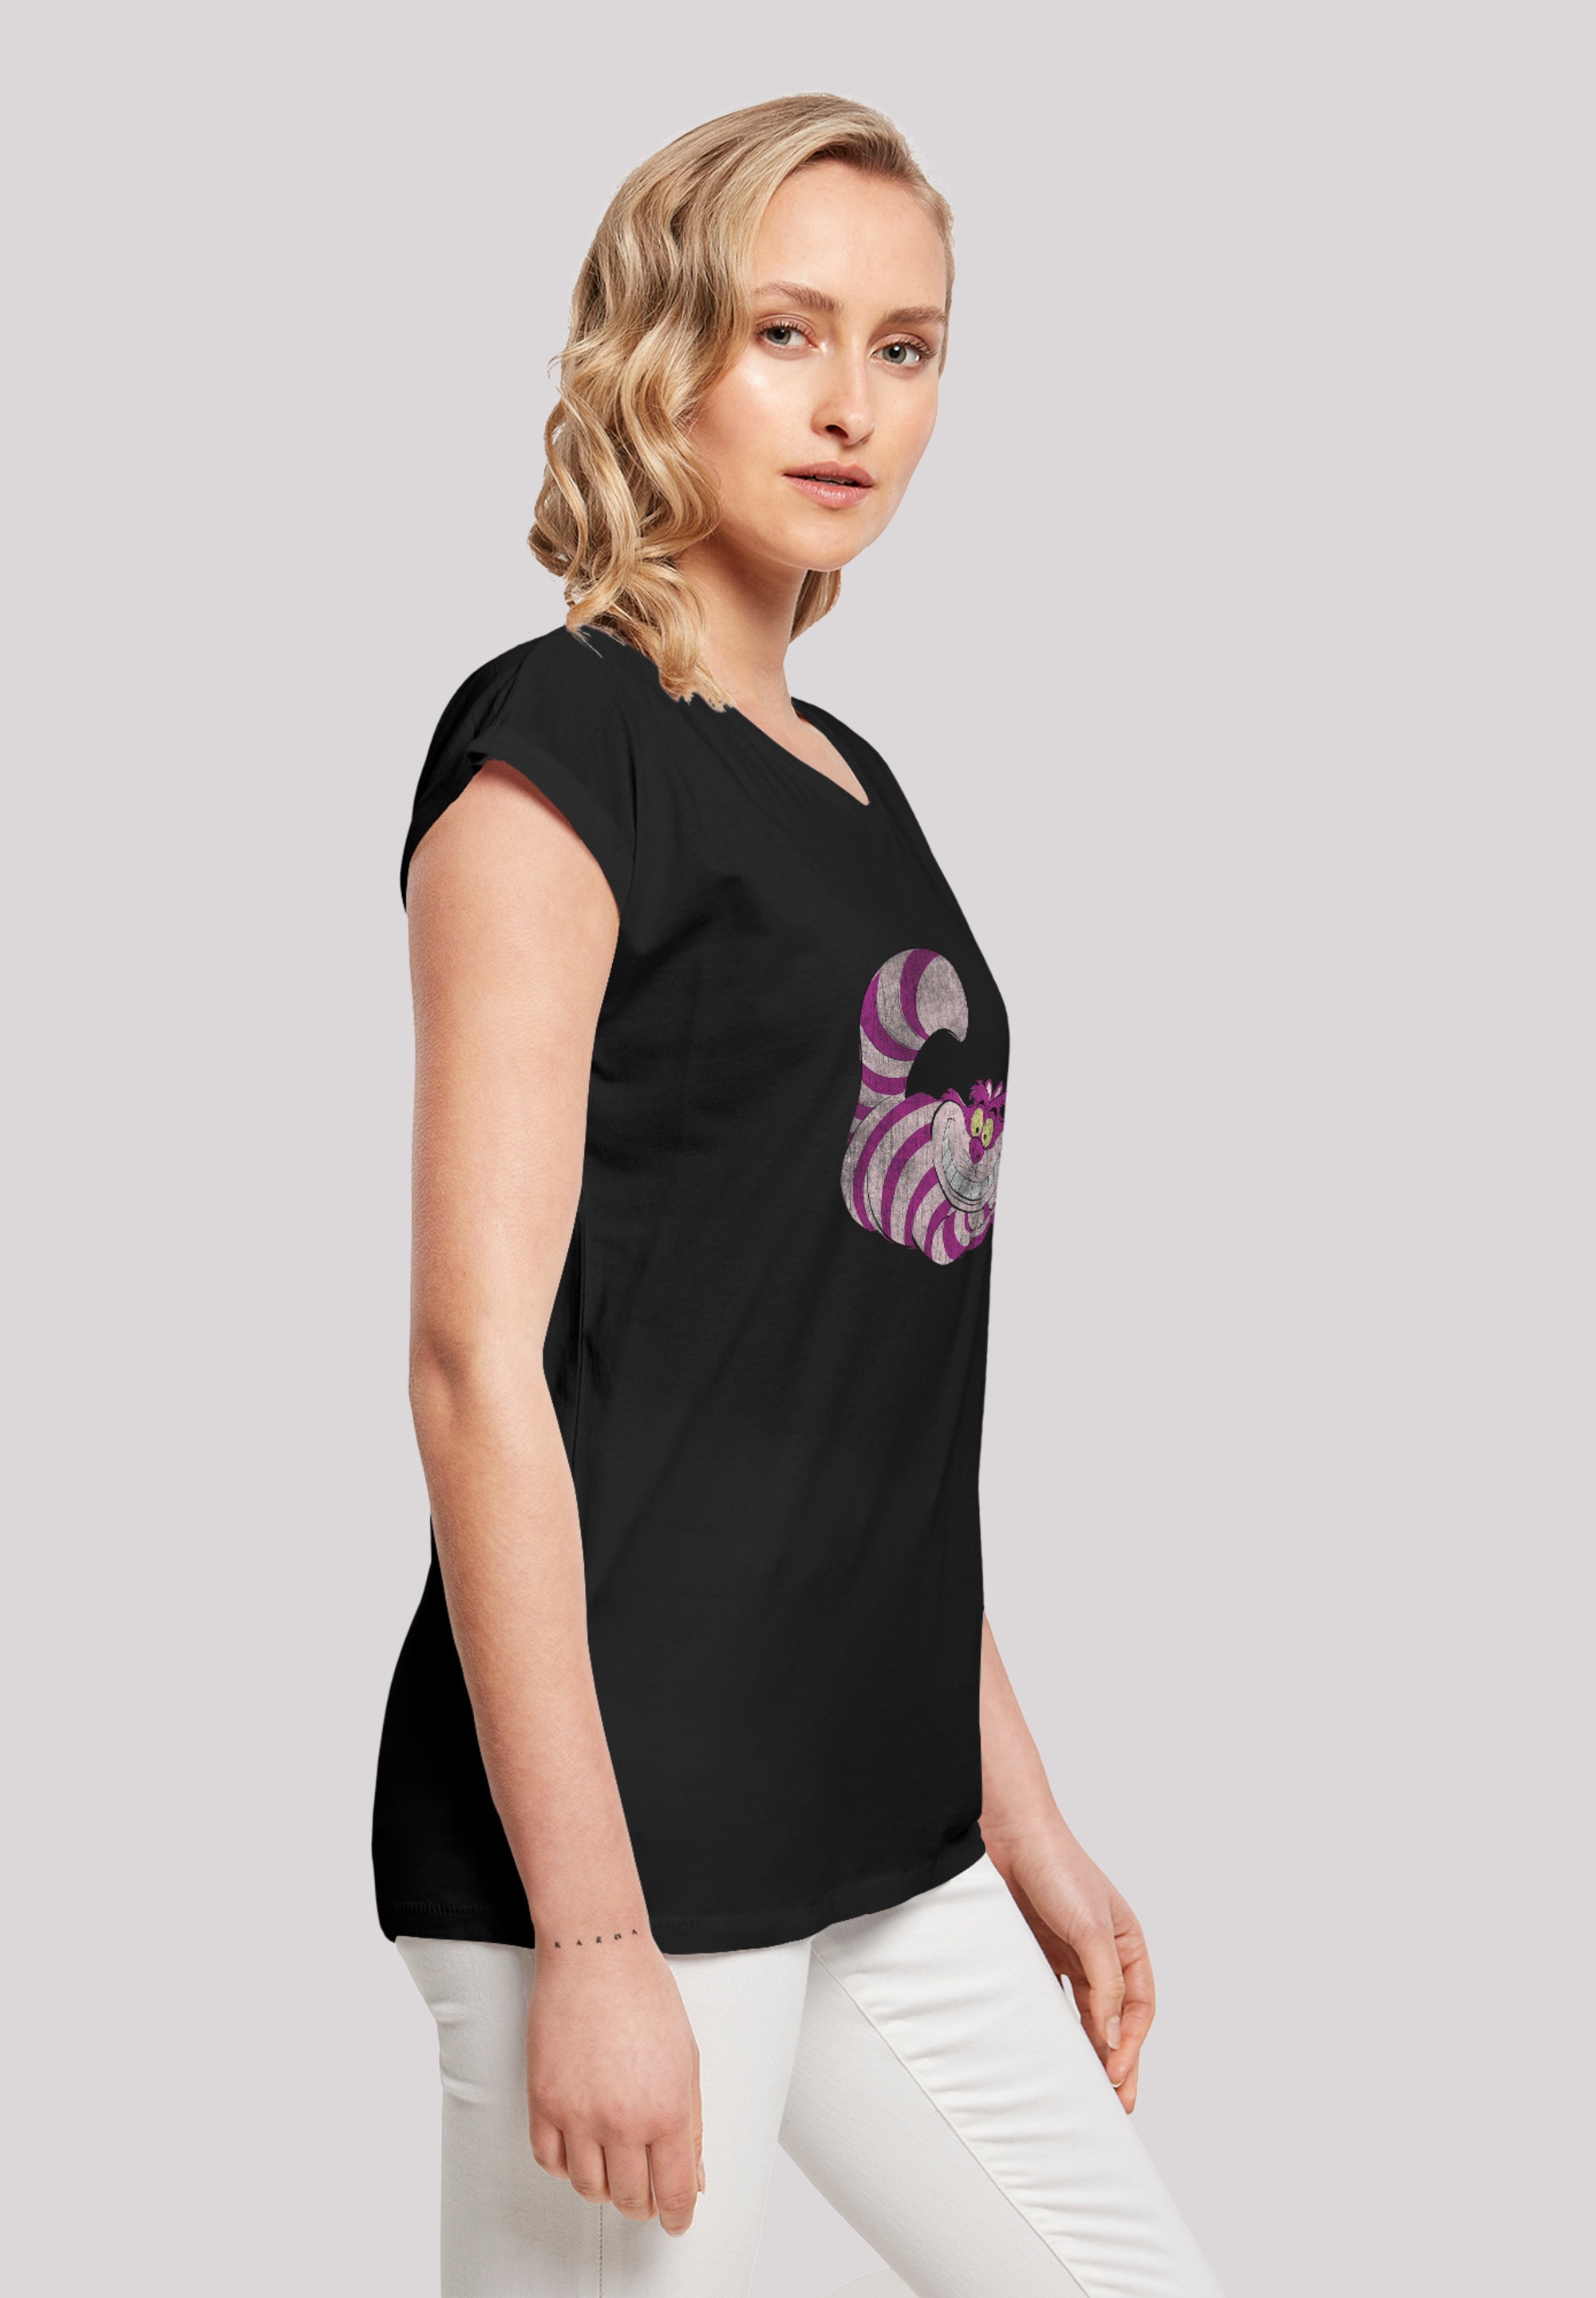 F4NT4STIC T-Shirt »Disney Alice im Wunderland Cheshire Cat«, Damen,Premium Merch,Regular-Fit,Kurze Ärmel,Bedruckt